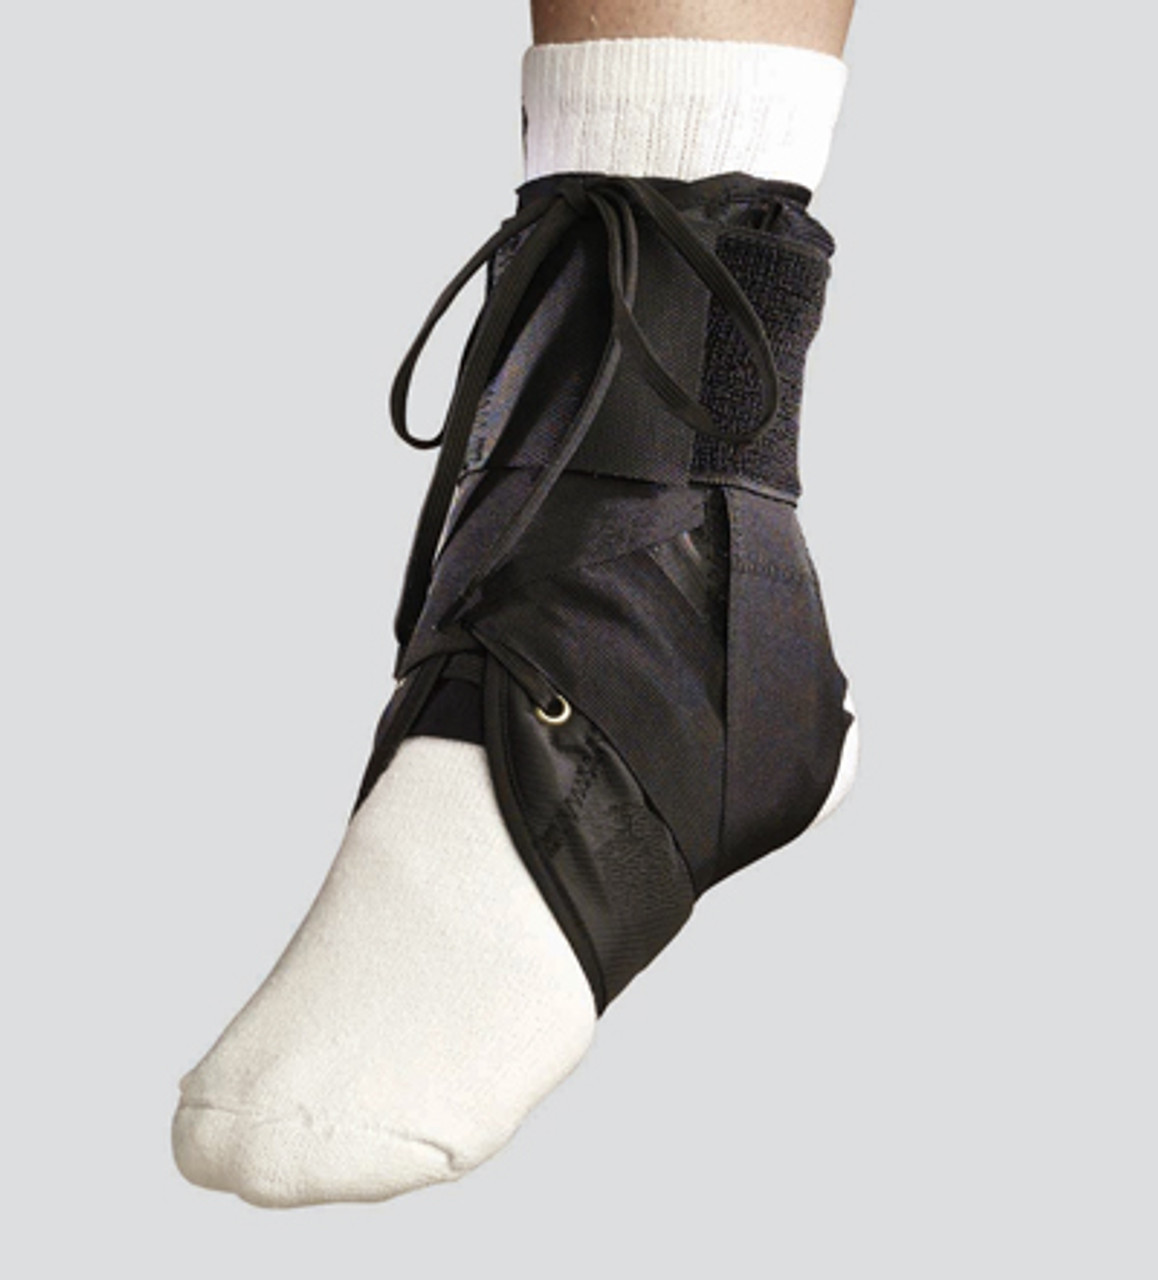 Ankle Stabilizer with Heel Locking Straps